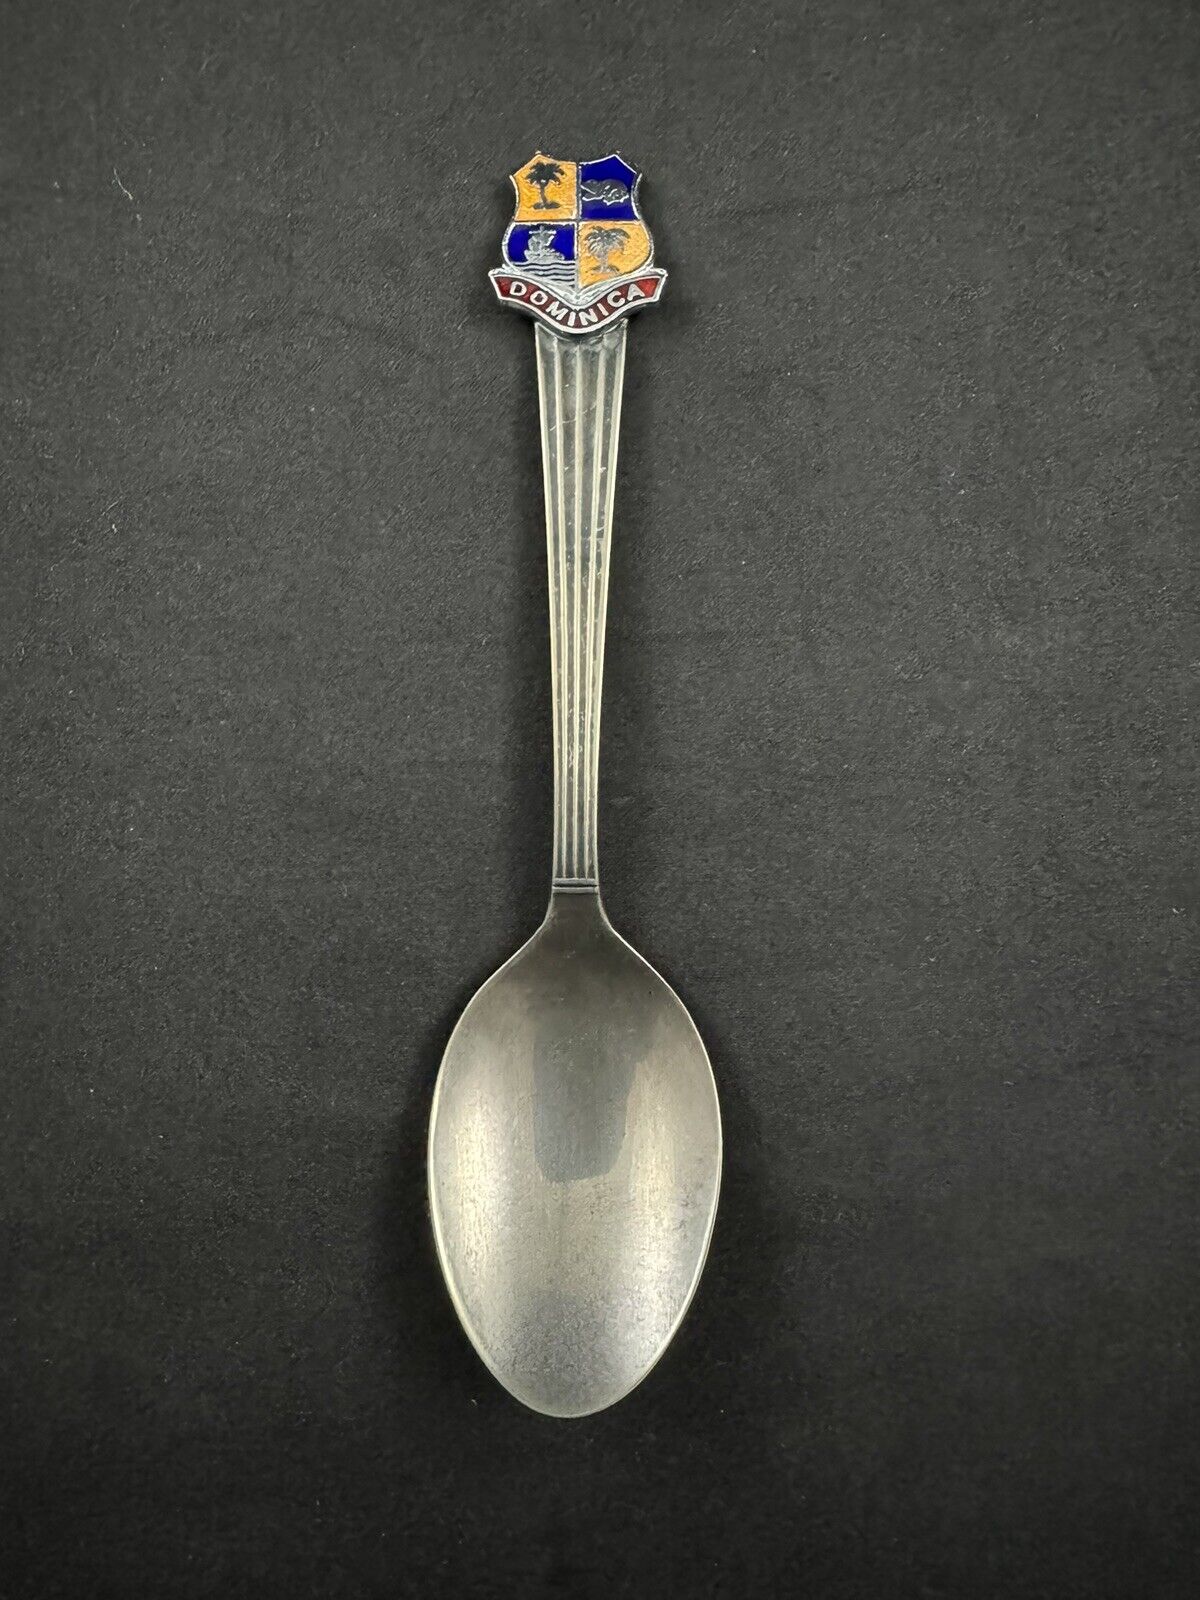 Vintage Dominica Silver Plated Souvenir Spoon